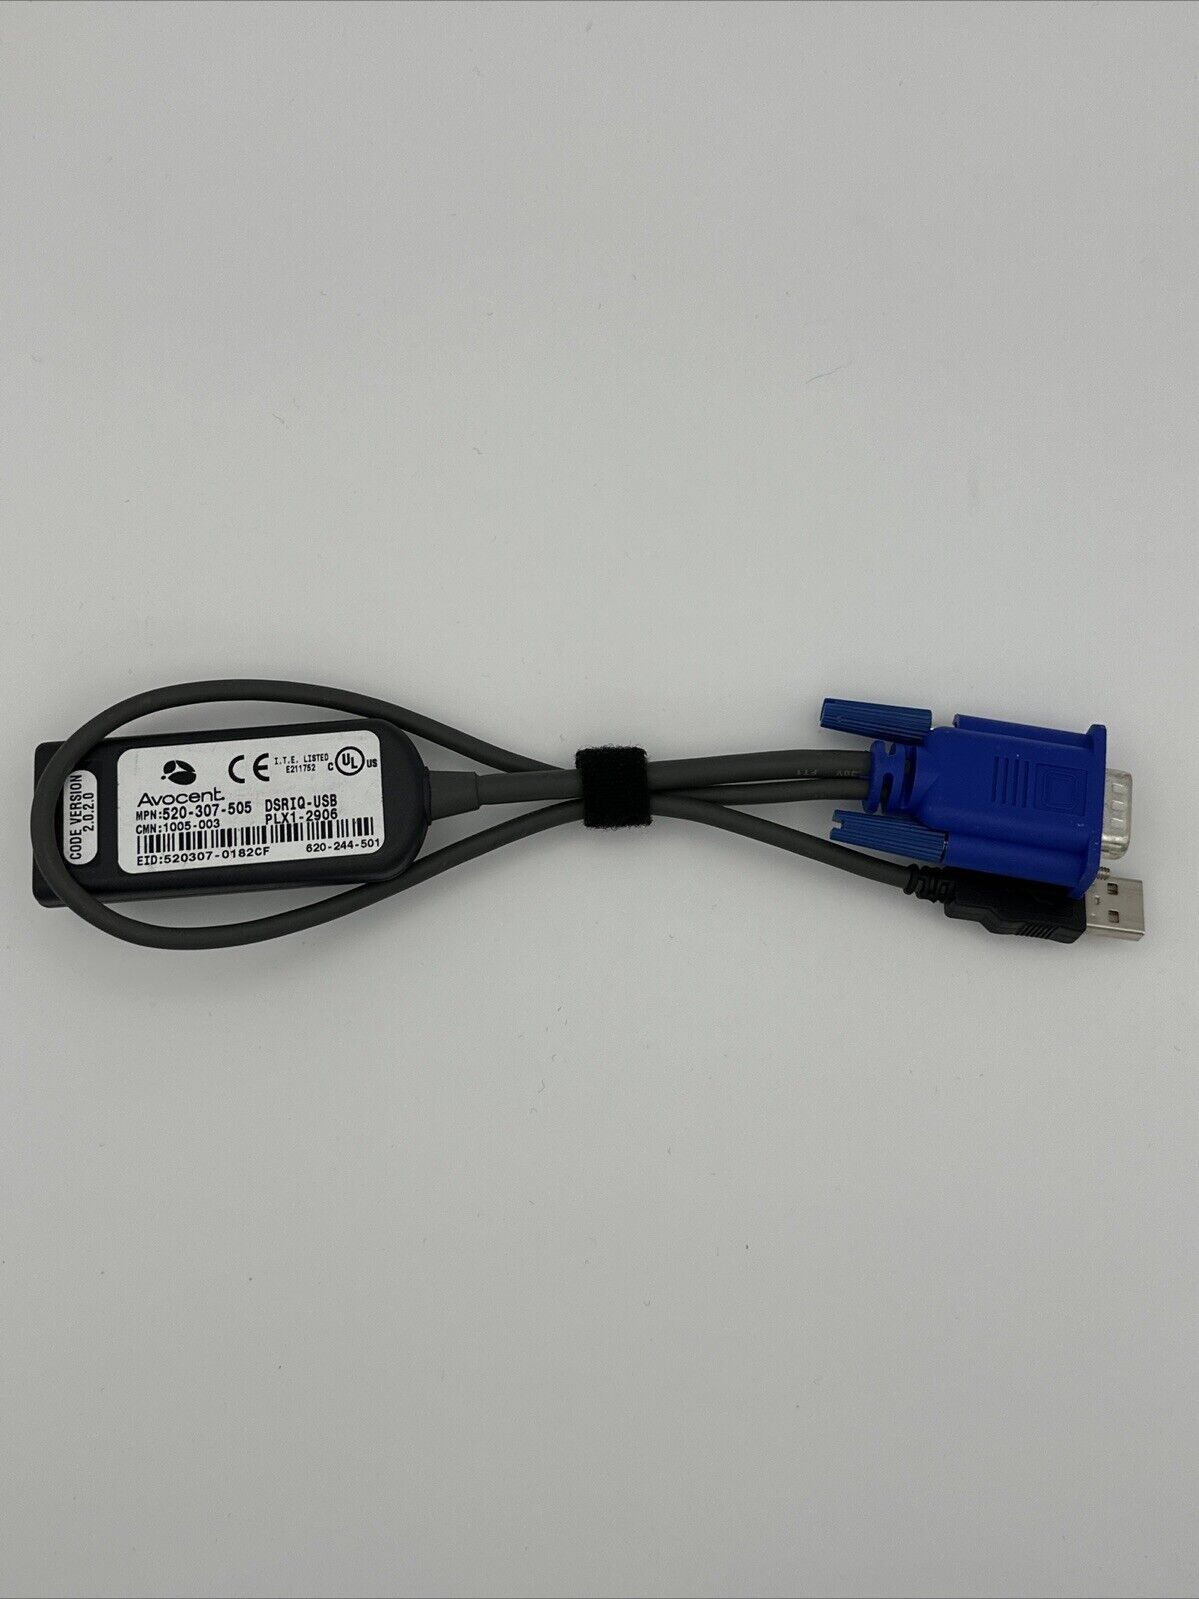 Avocent DSRIQ-USB Server Interface Module for USB/VGA Computers